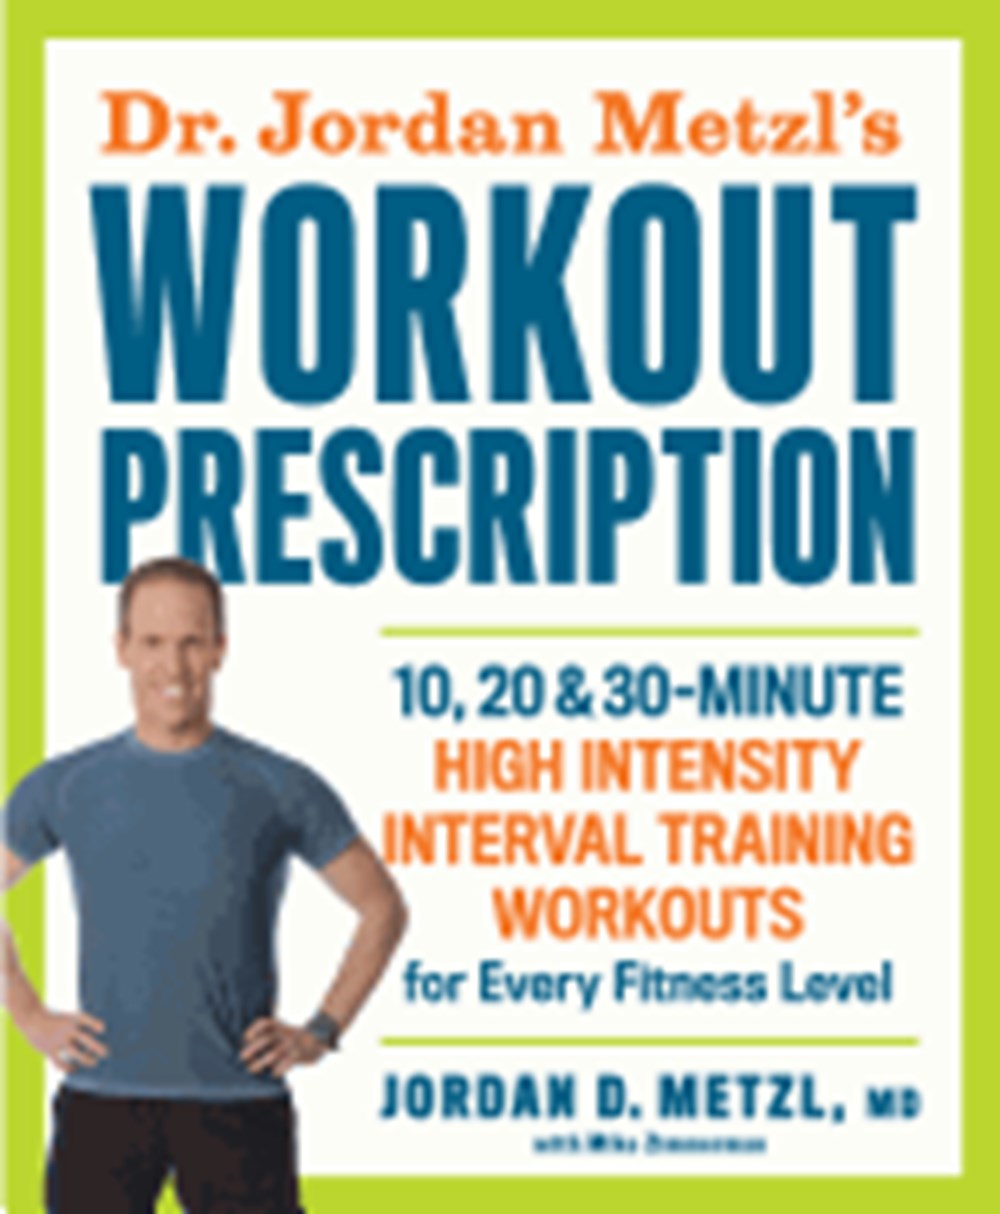 Dr. Jordan Metzl's Workout Prescription: 10, 20 & 30-Minute High-Intensity Interval Training Workout